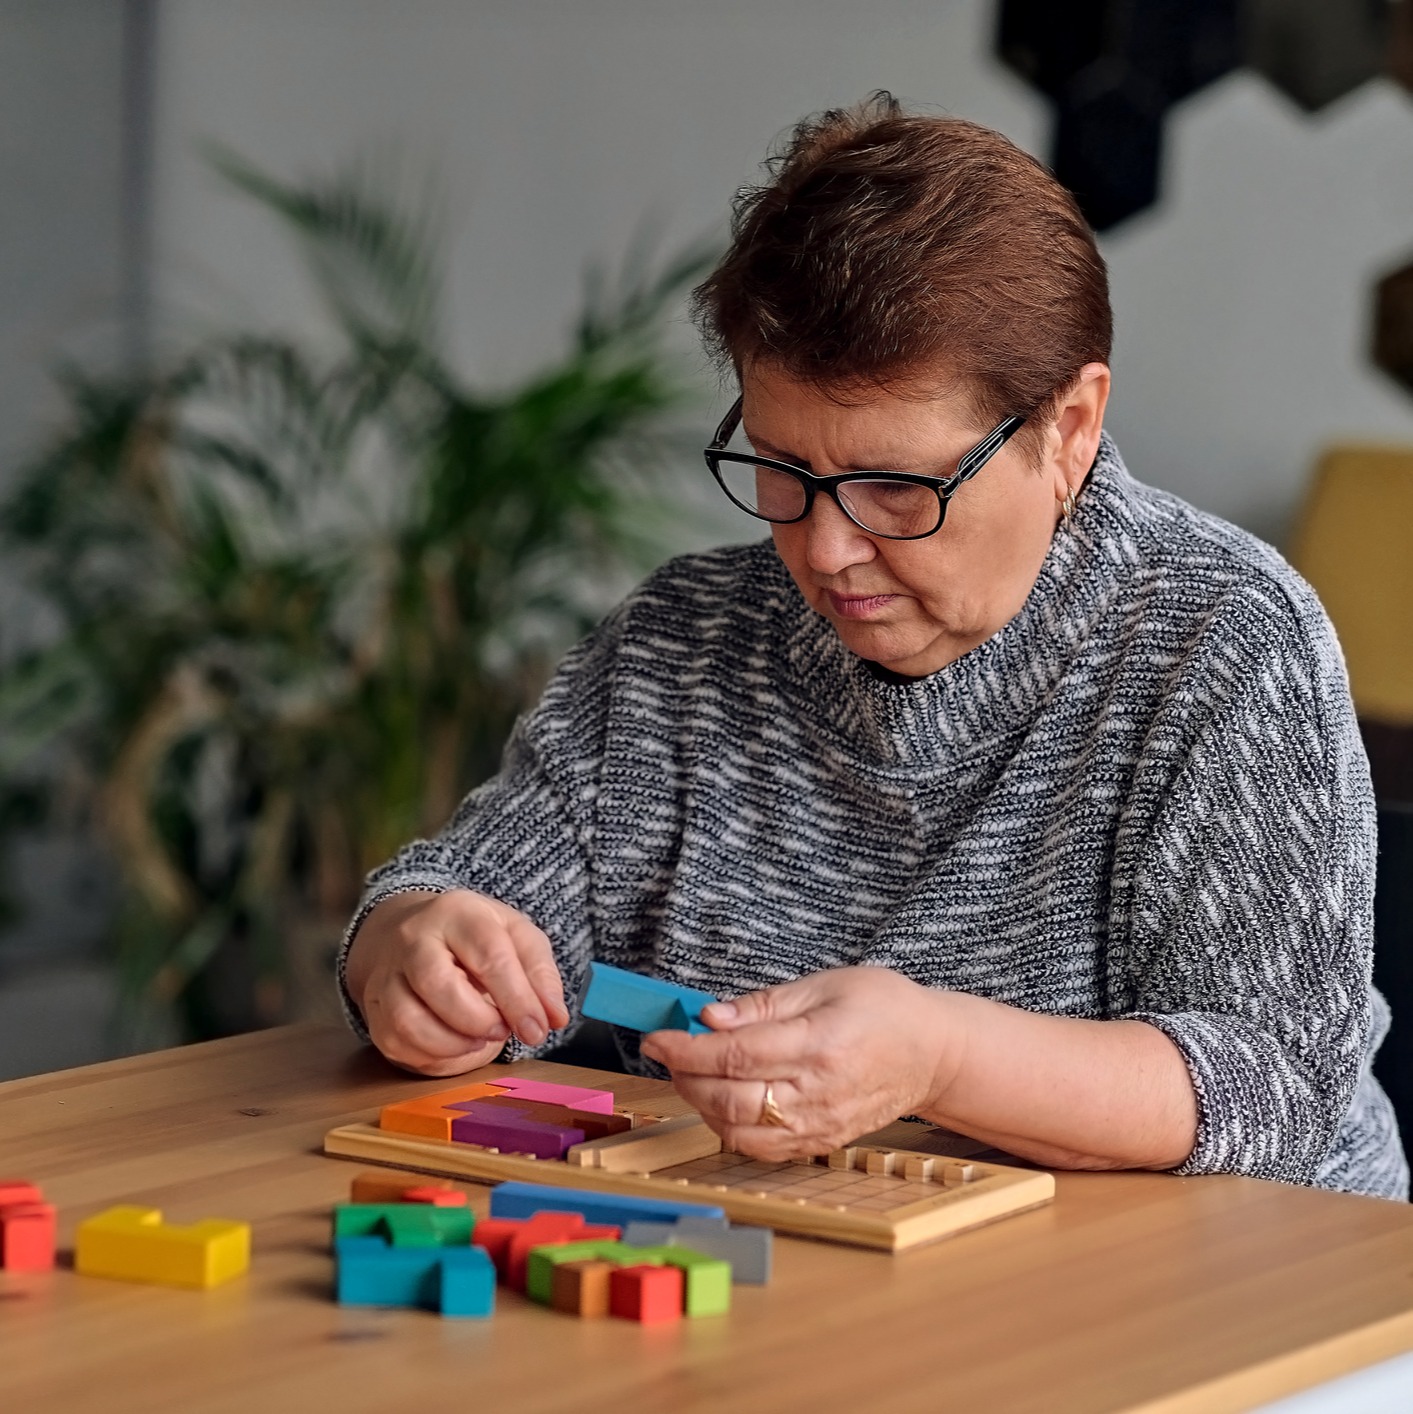 A senior woman assembling a wooden puzzle